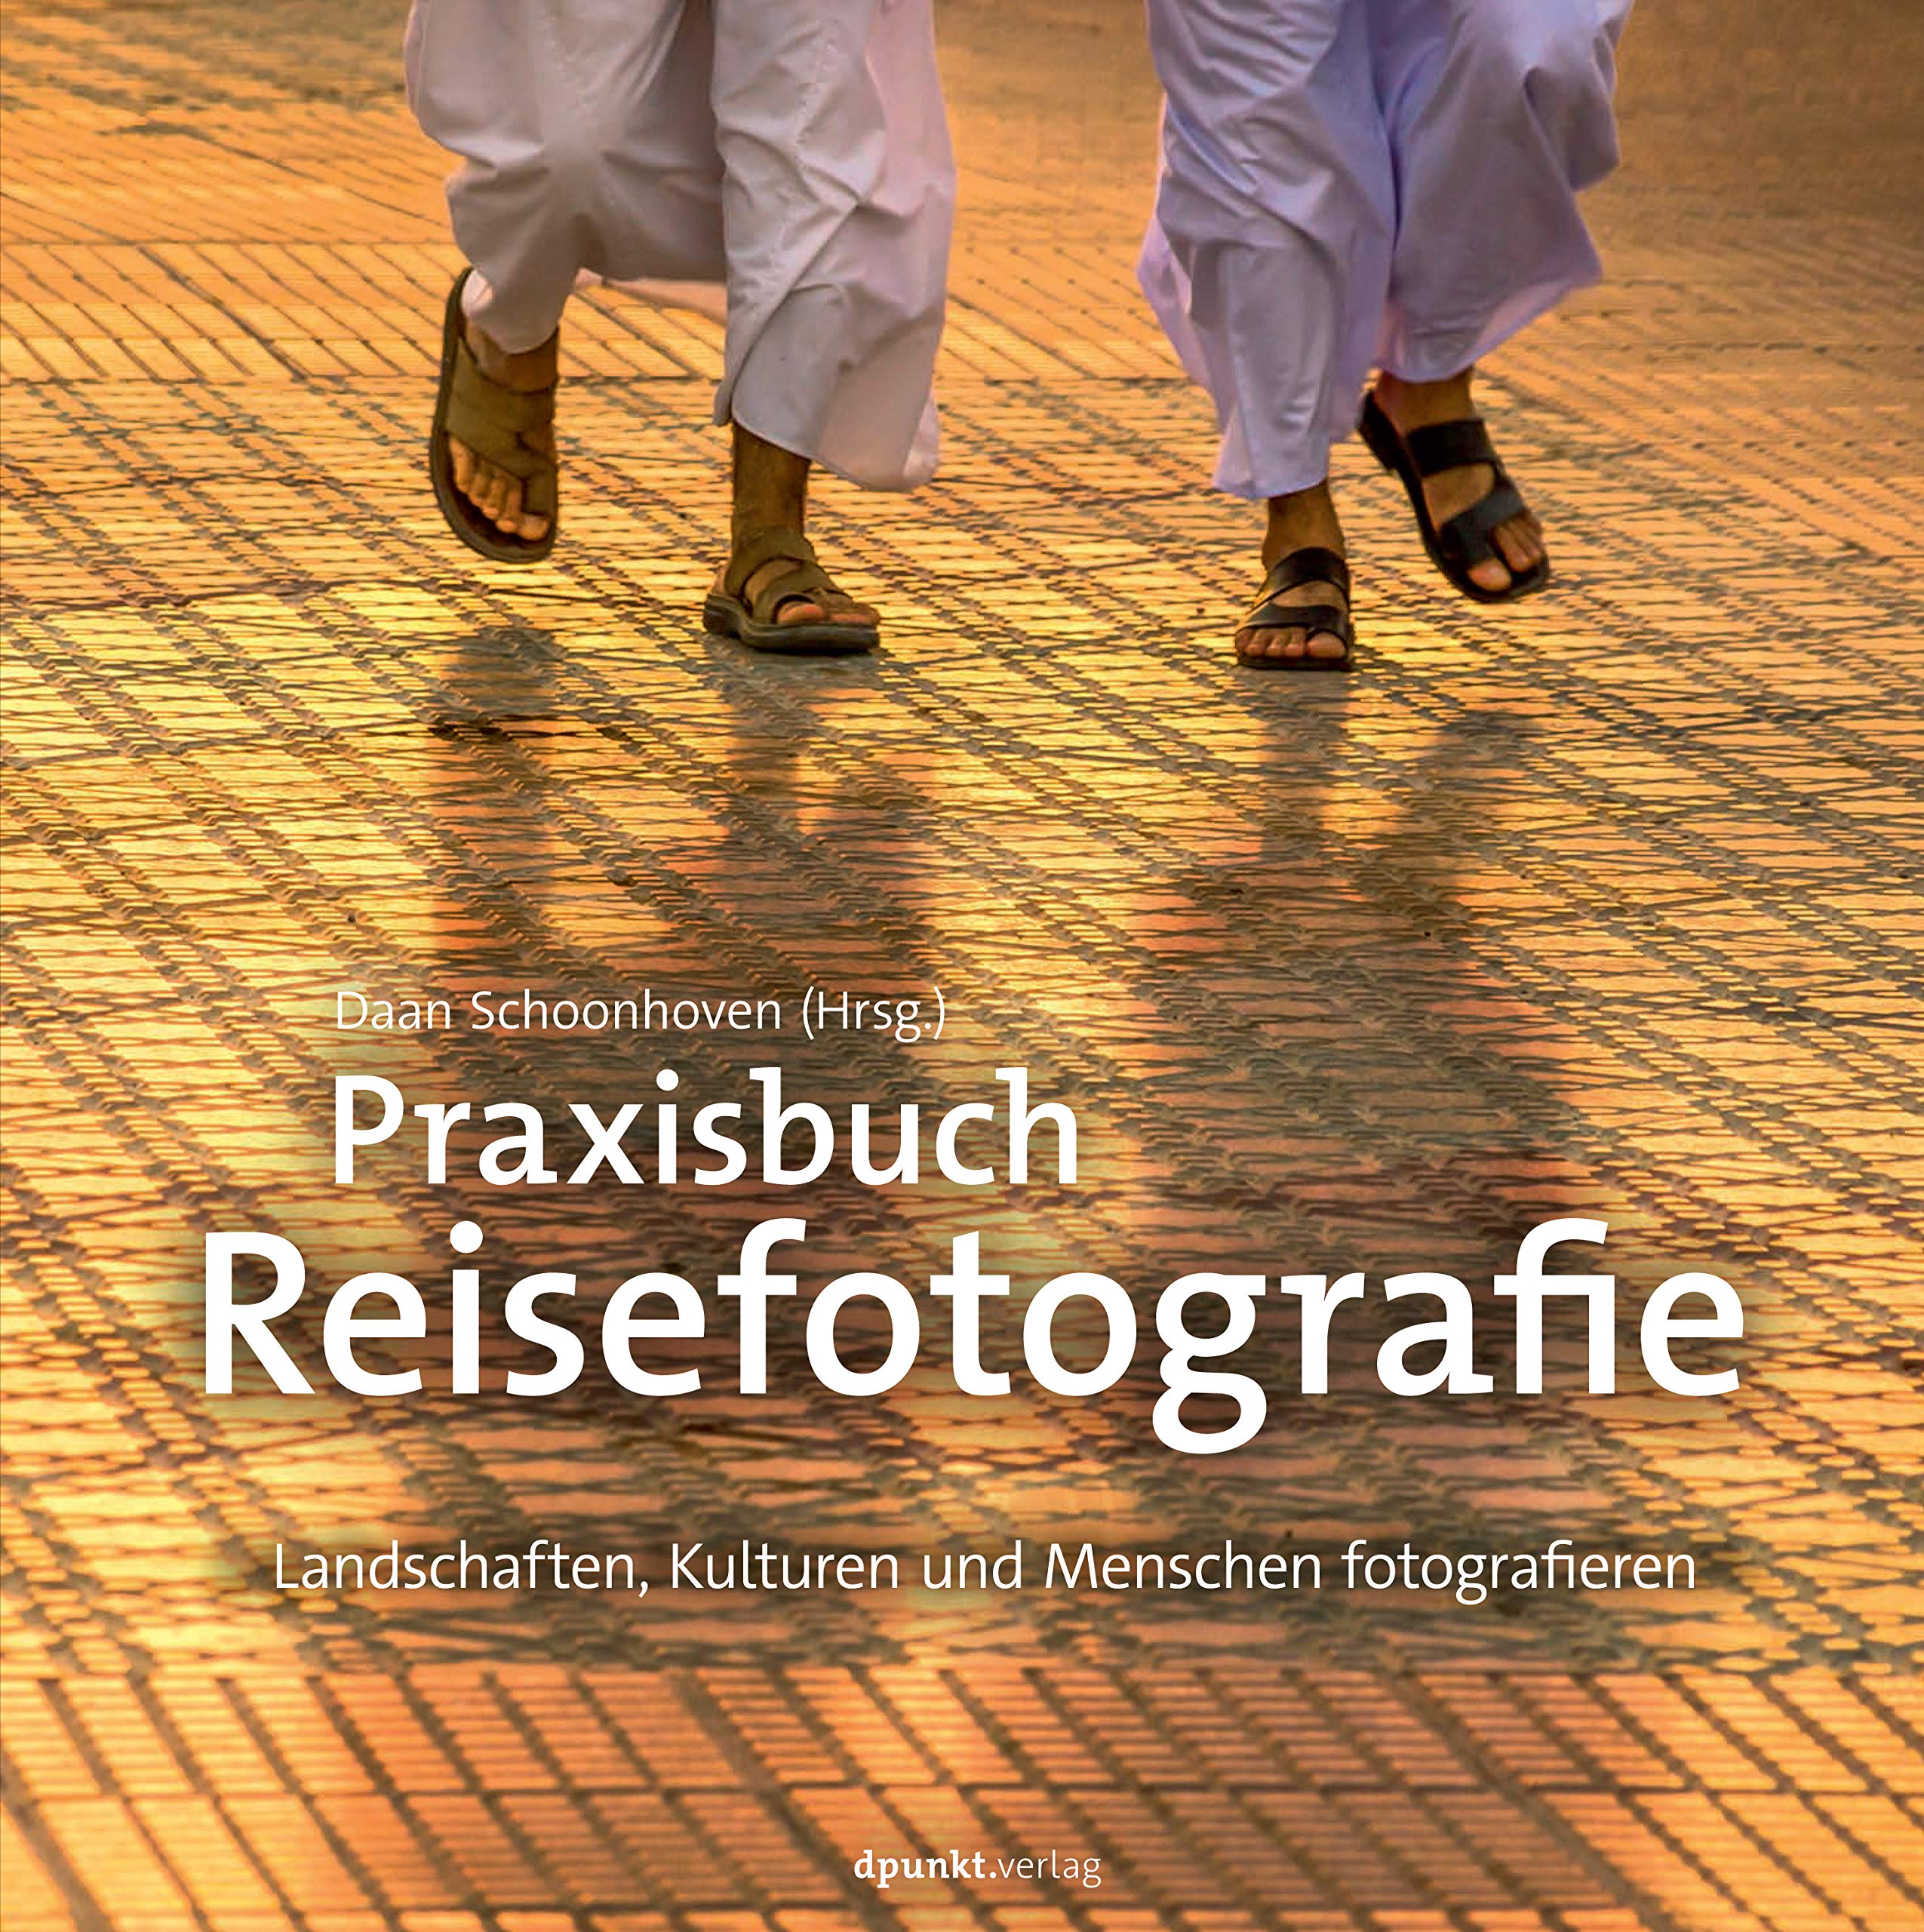 Praxisbuch Reisefotografie, Autor: Daan Schoonhoven Verlag: dpunkt Verlag